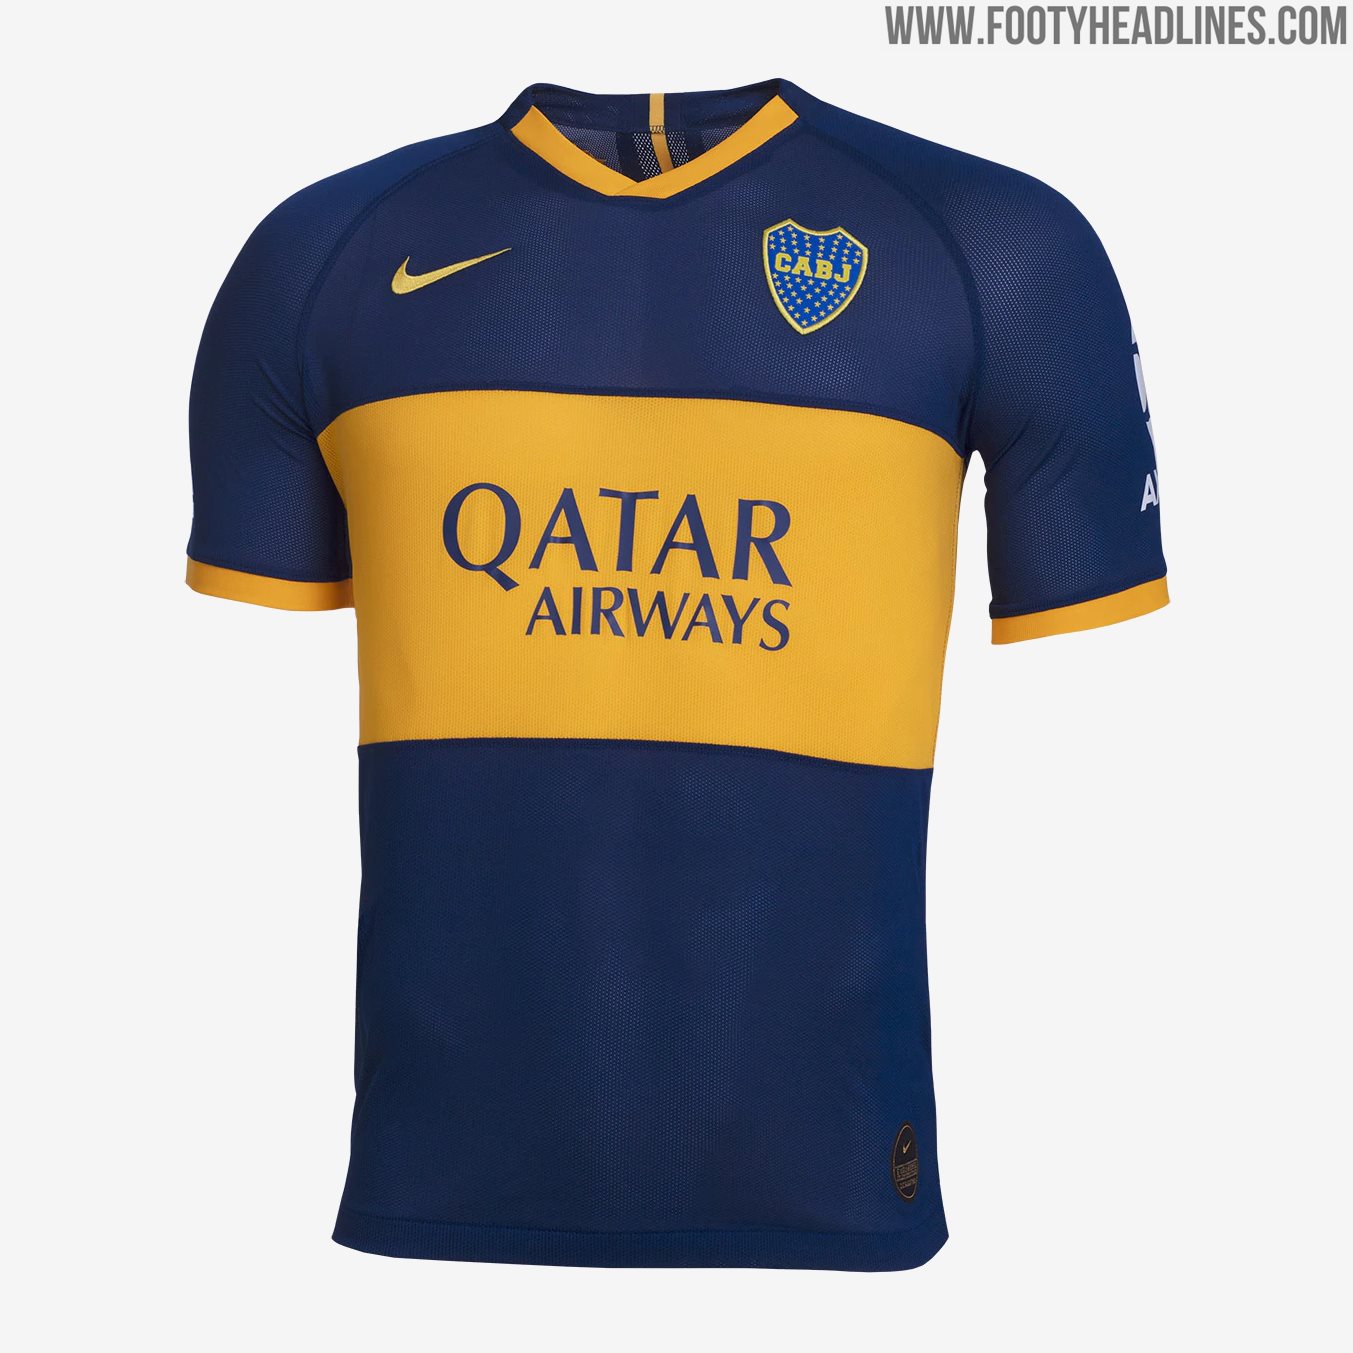 Boca Juniors 19-20 Home Kit Released - Footy Headlines